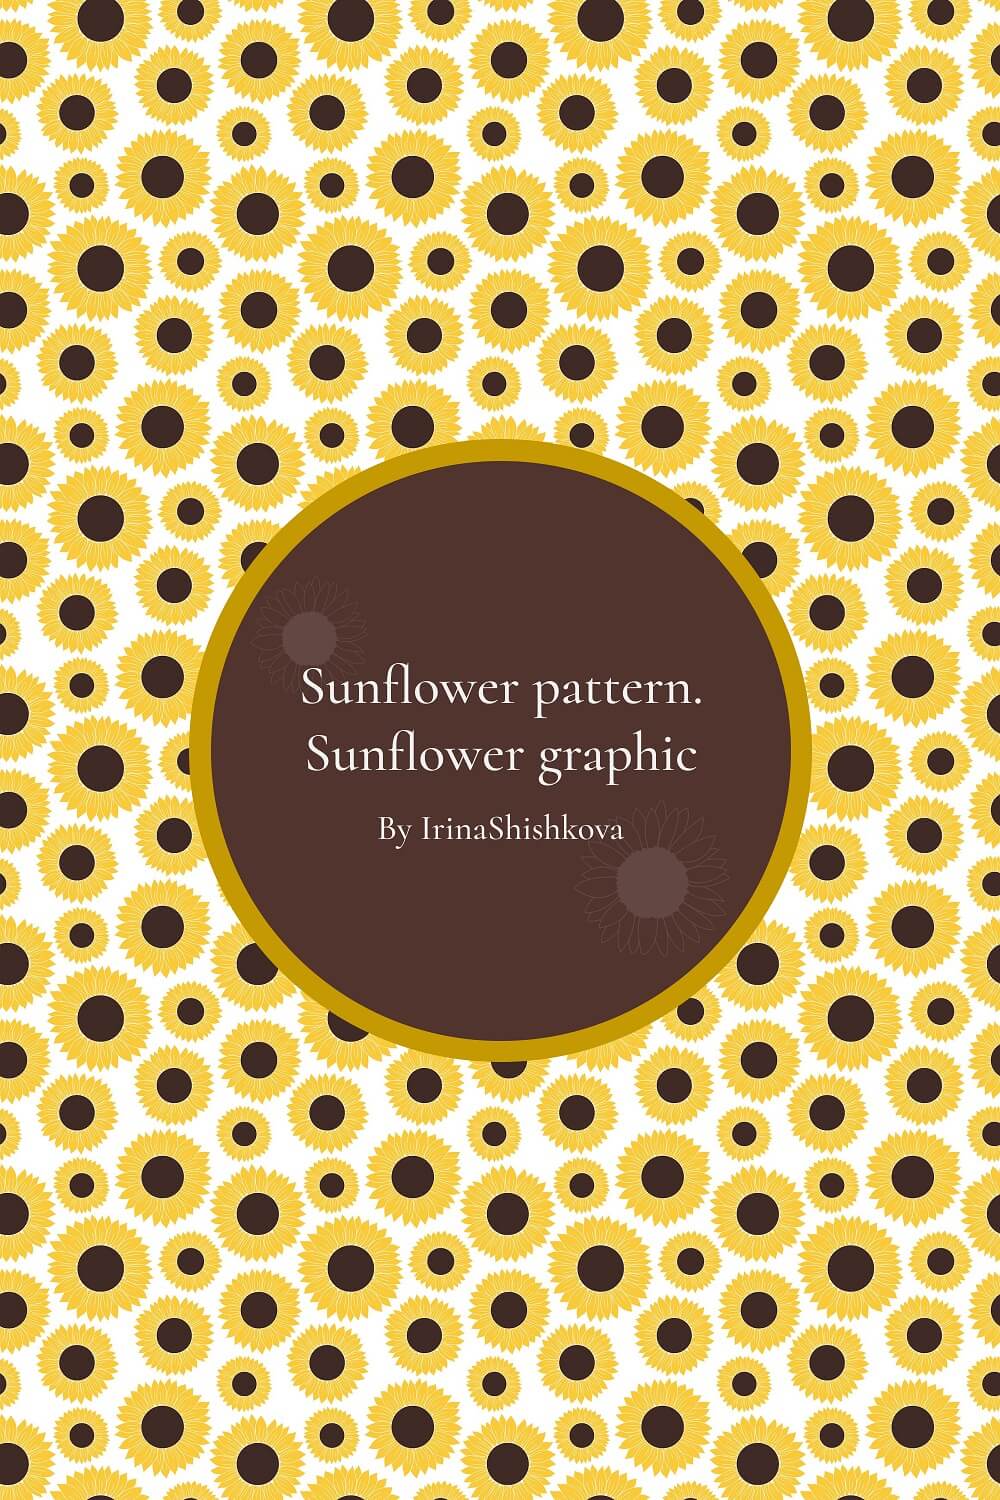 Sunflowers with dark centers.